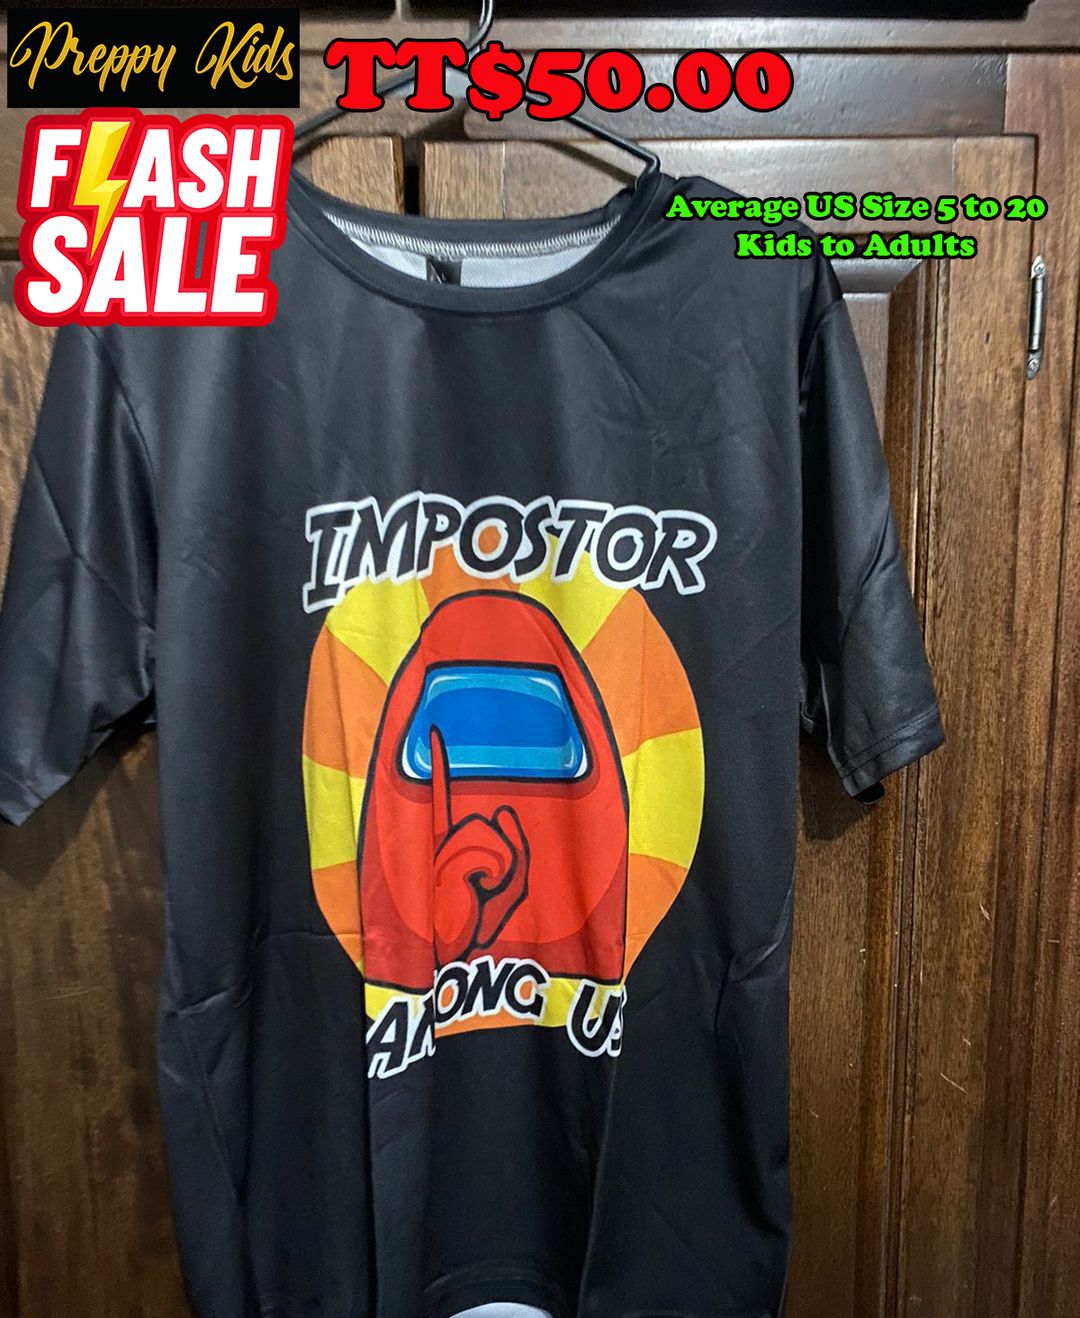 Sale Among US Imposter Tshirt